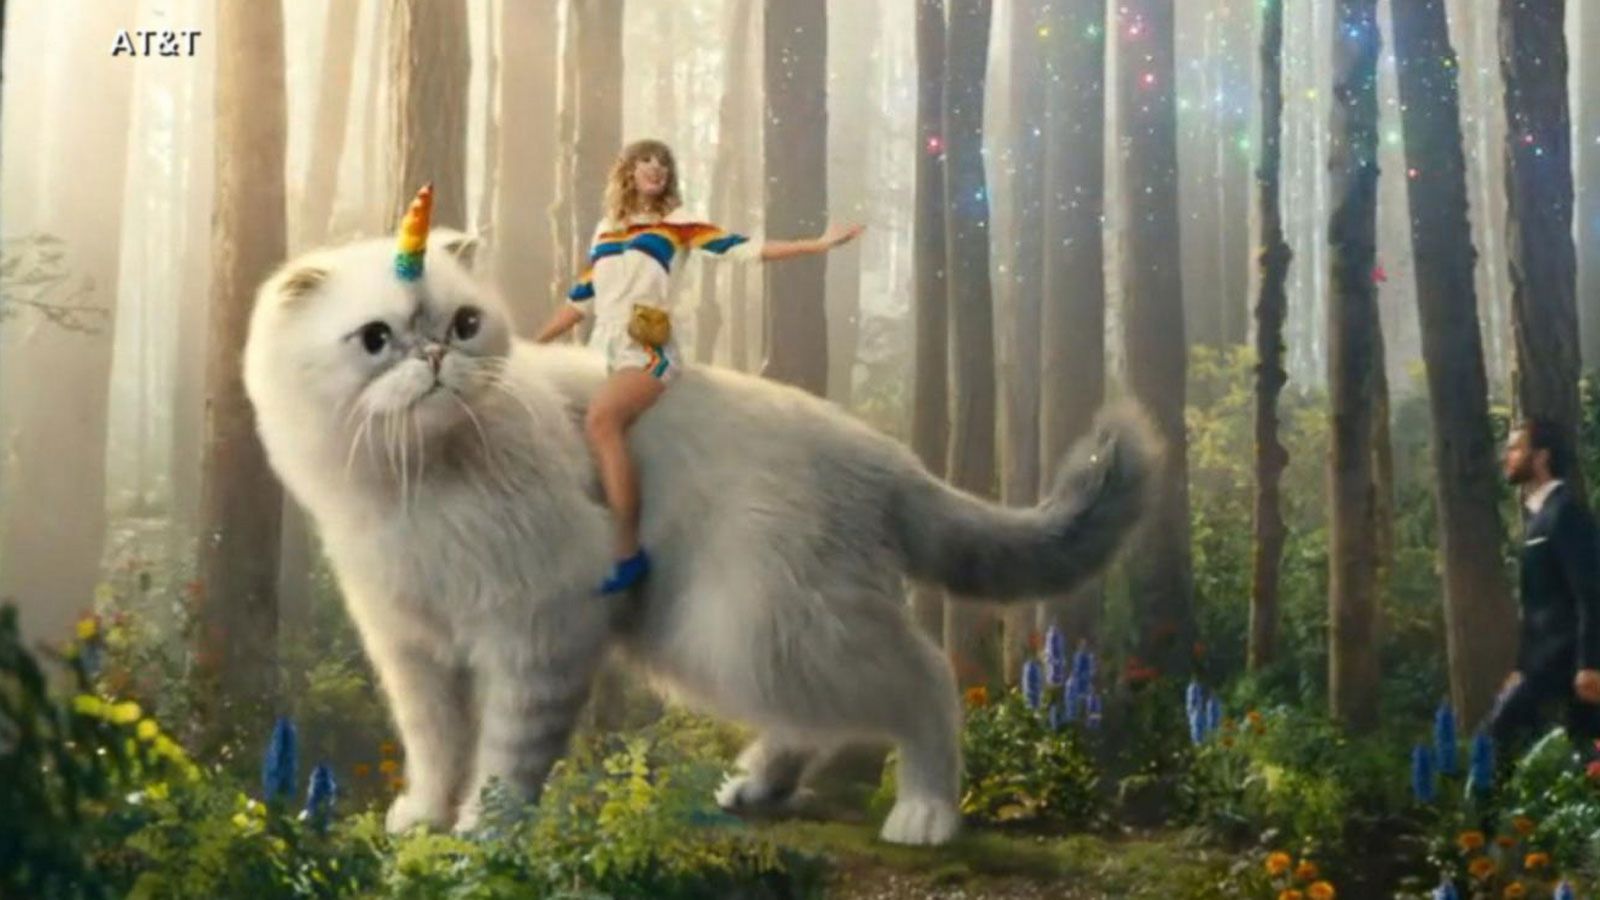 VIDEO: Taylor Swift rides 'cat-icorn' in new DirecTV ad